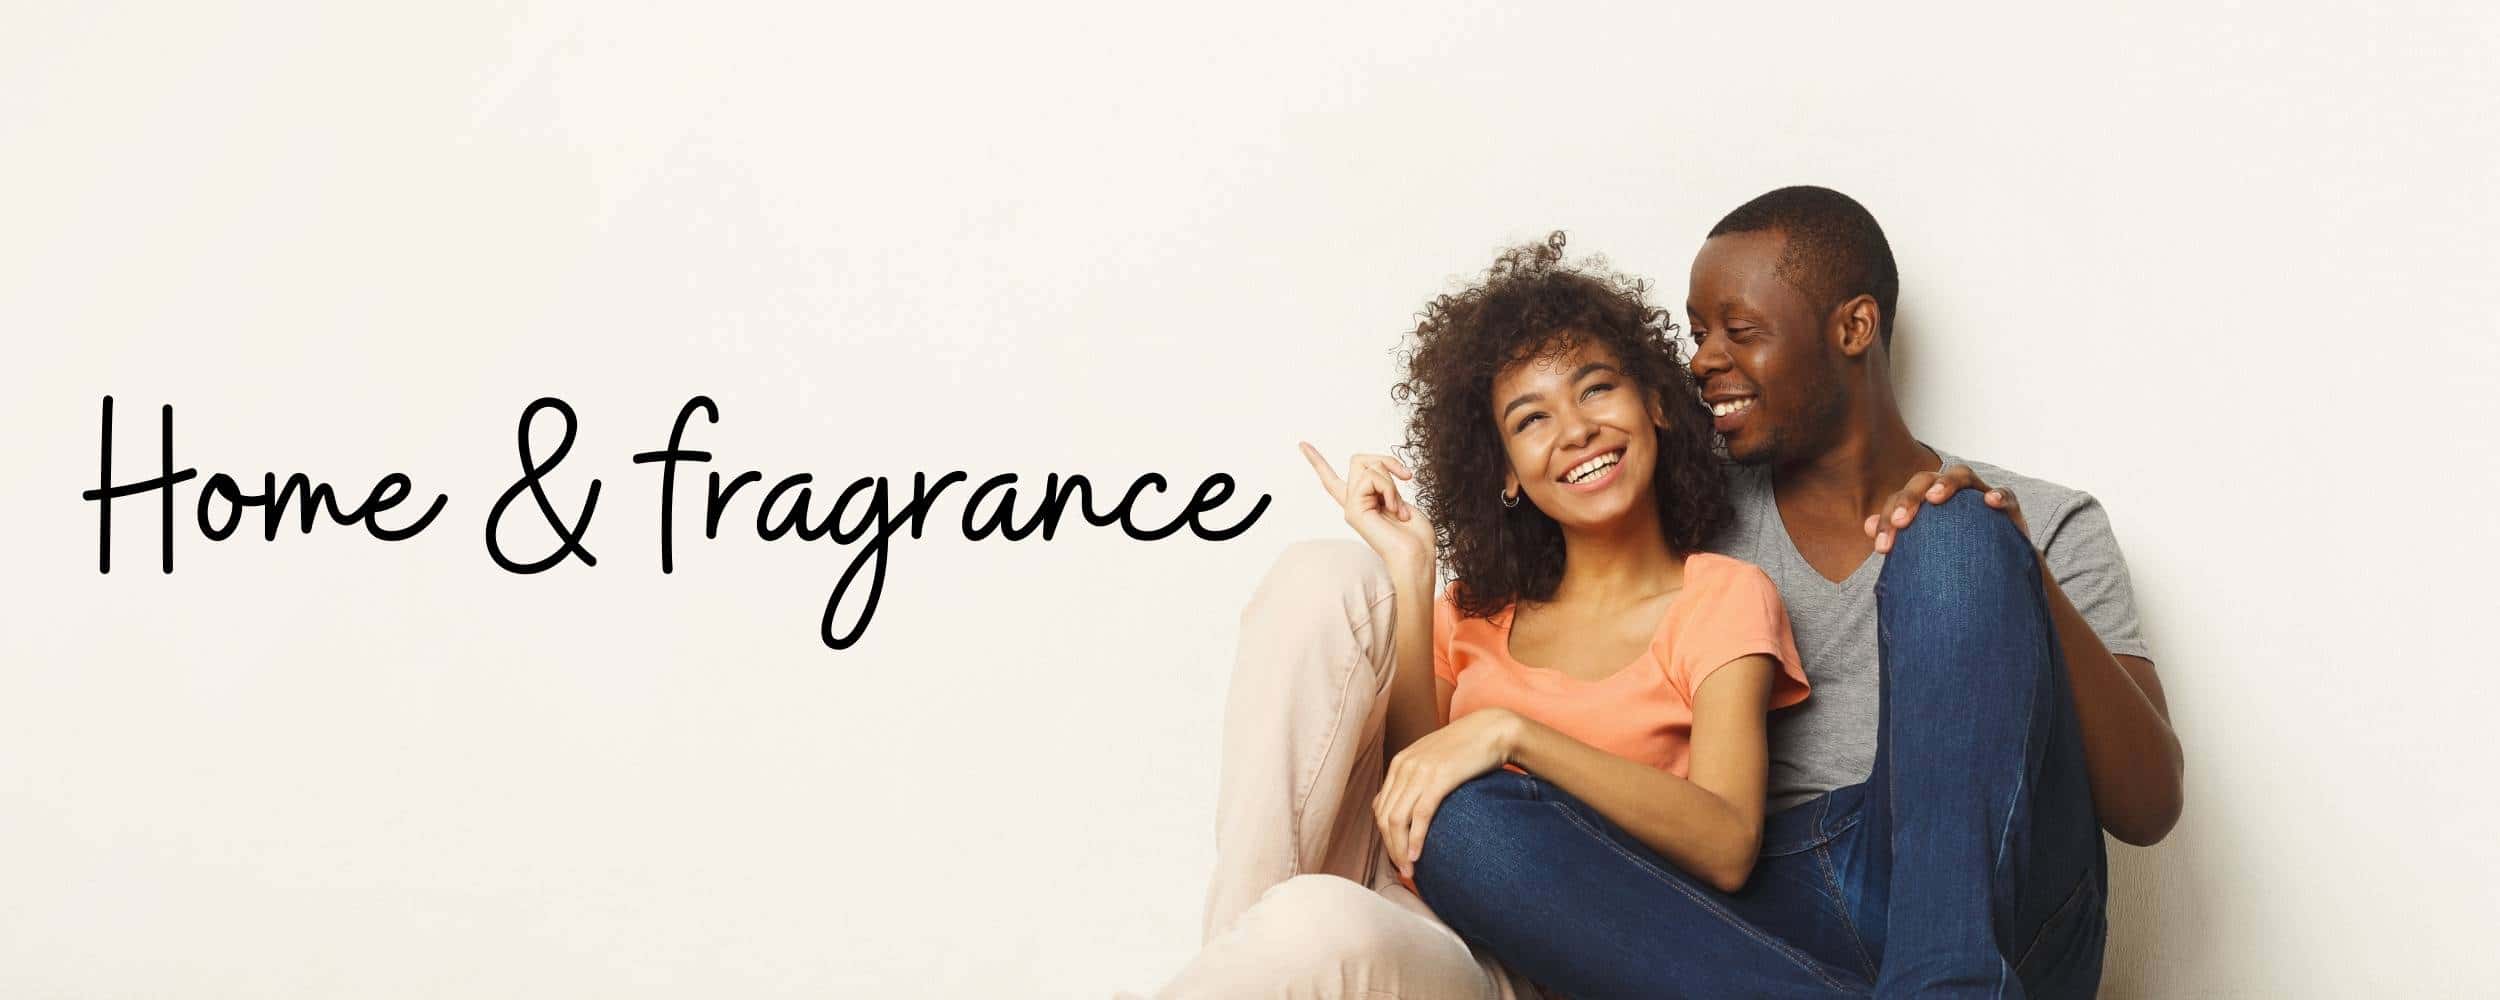 Home & Fragrance